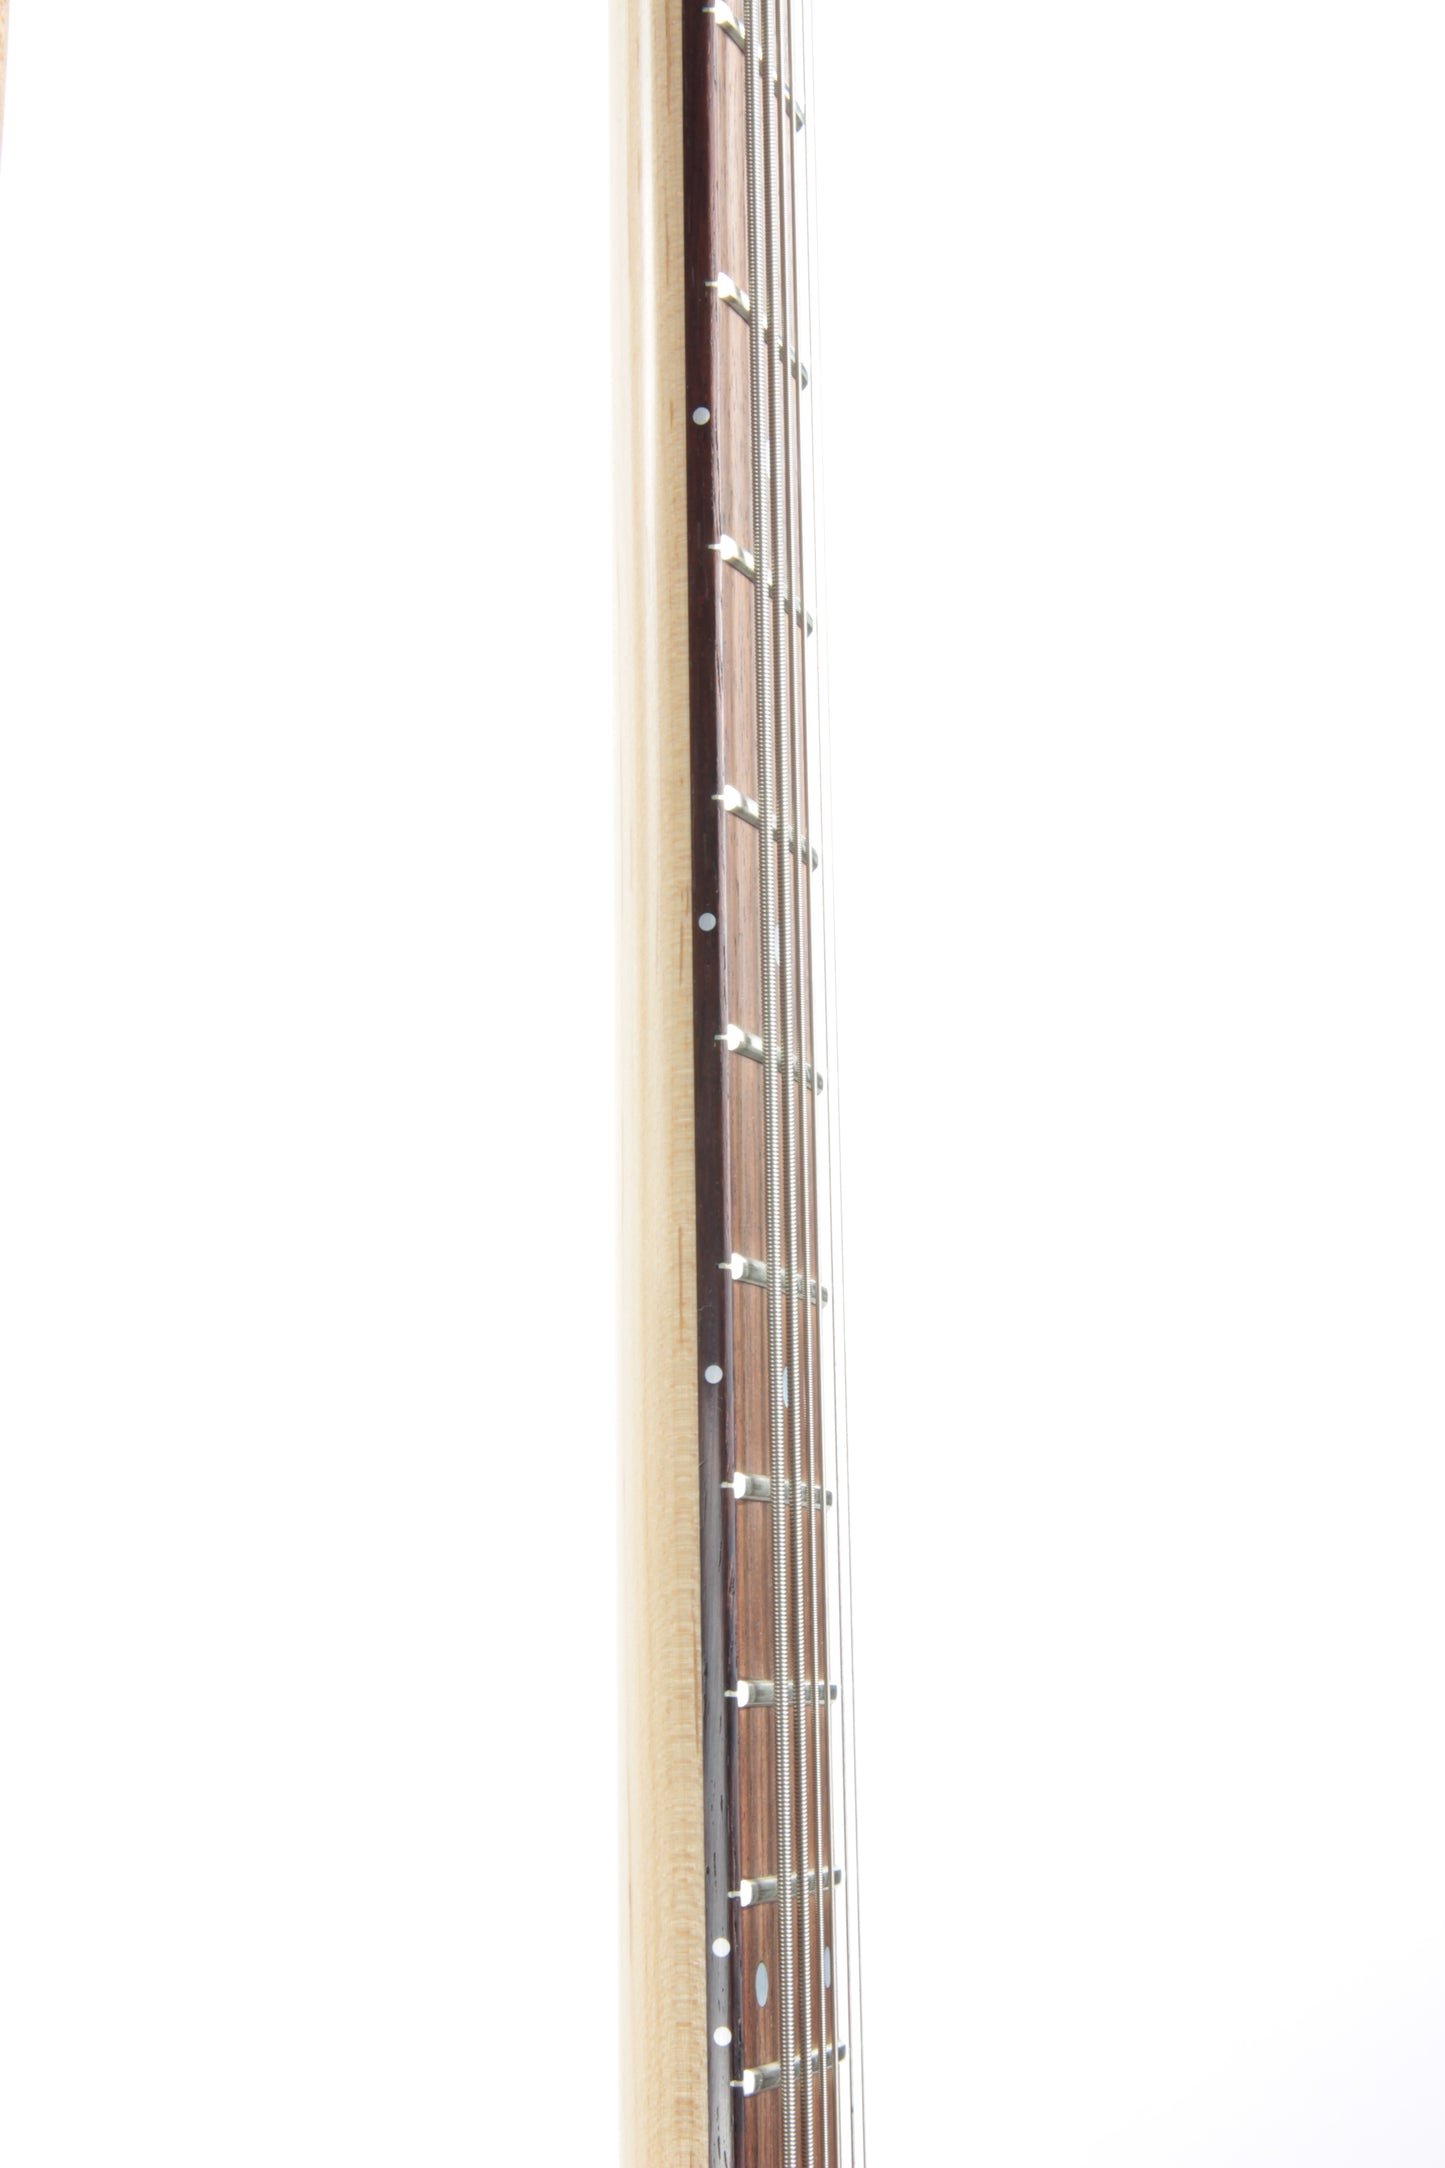 2005 Jerry Jones Neptune Baritone 6-String Guitar U-2 Single Cut Red 2 Pickup Model